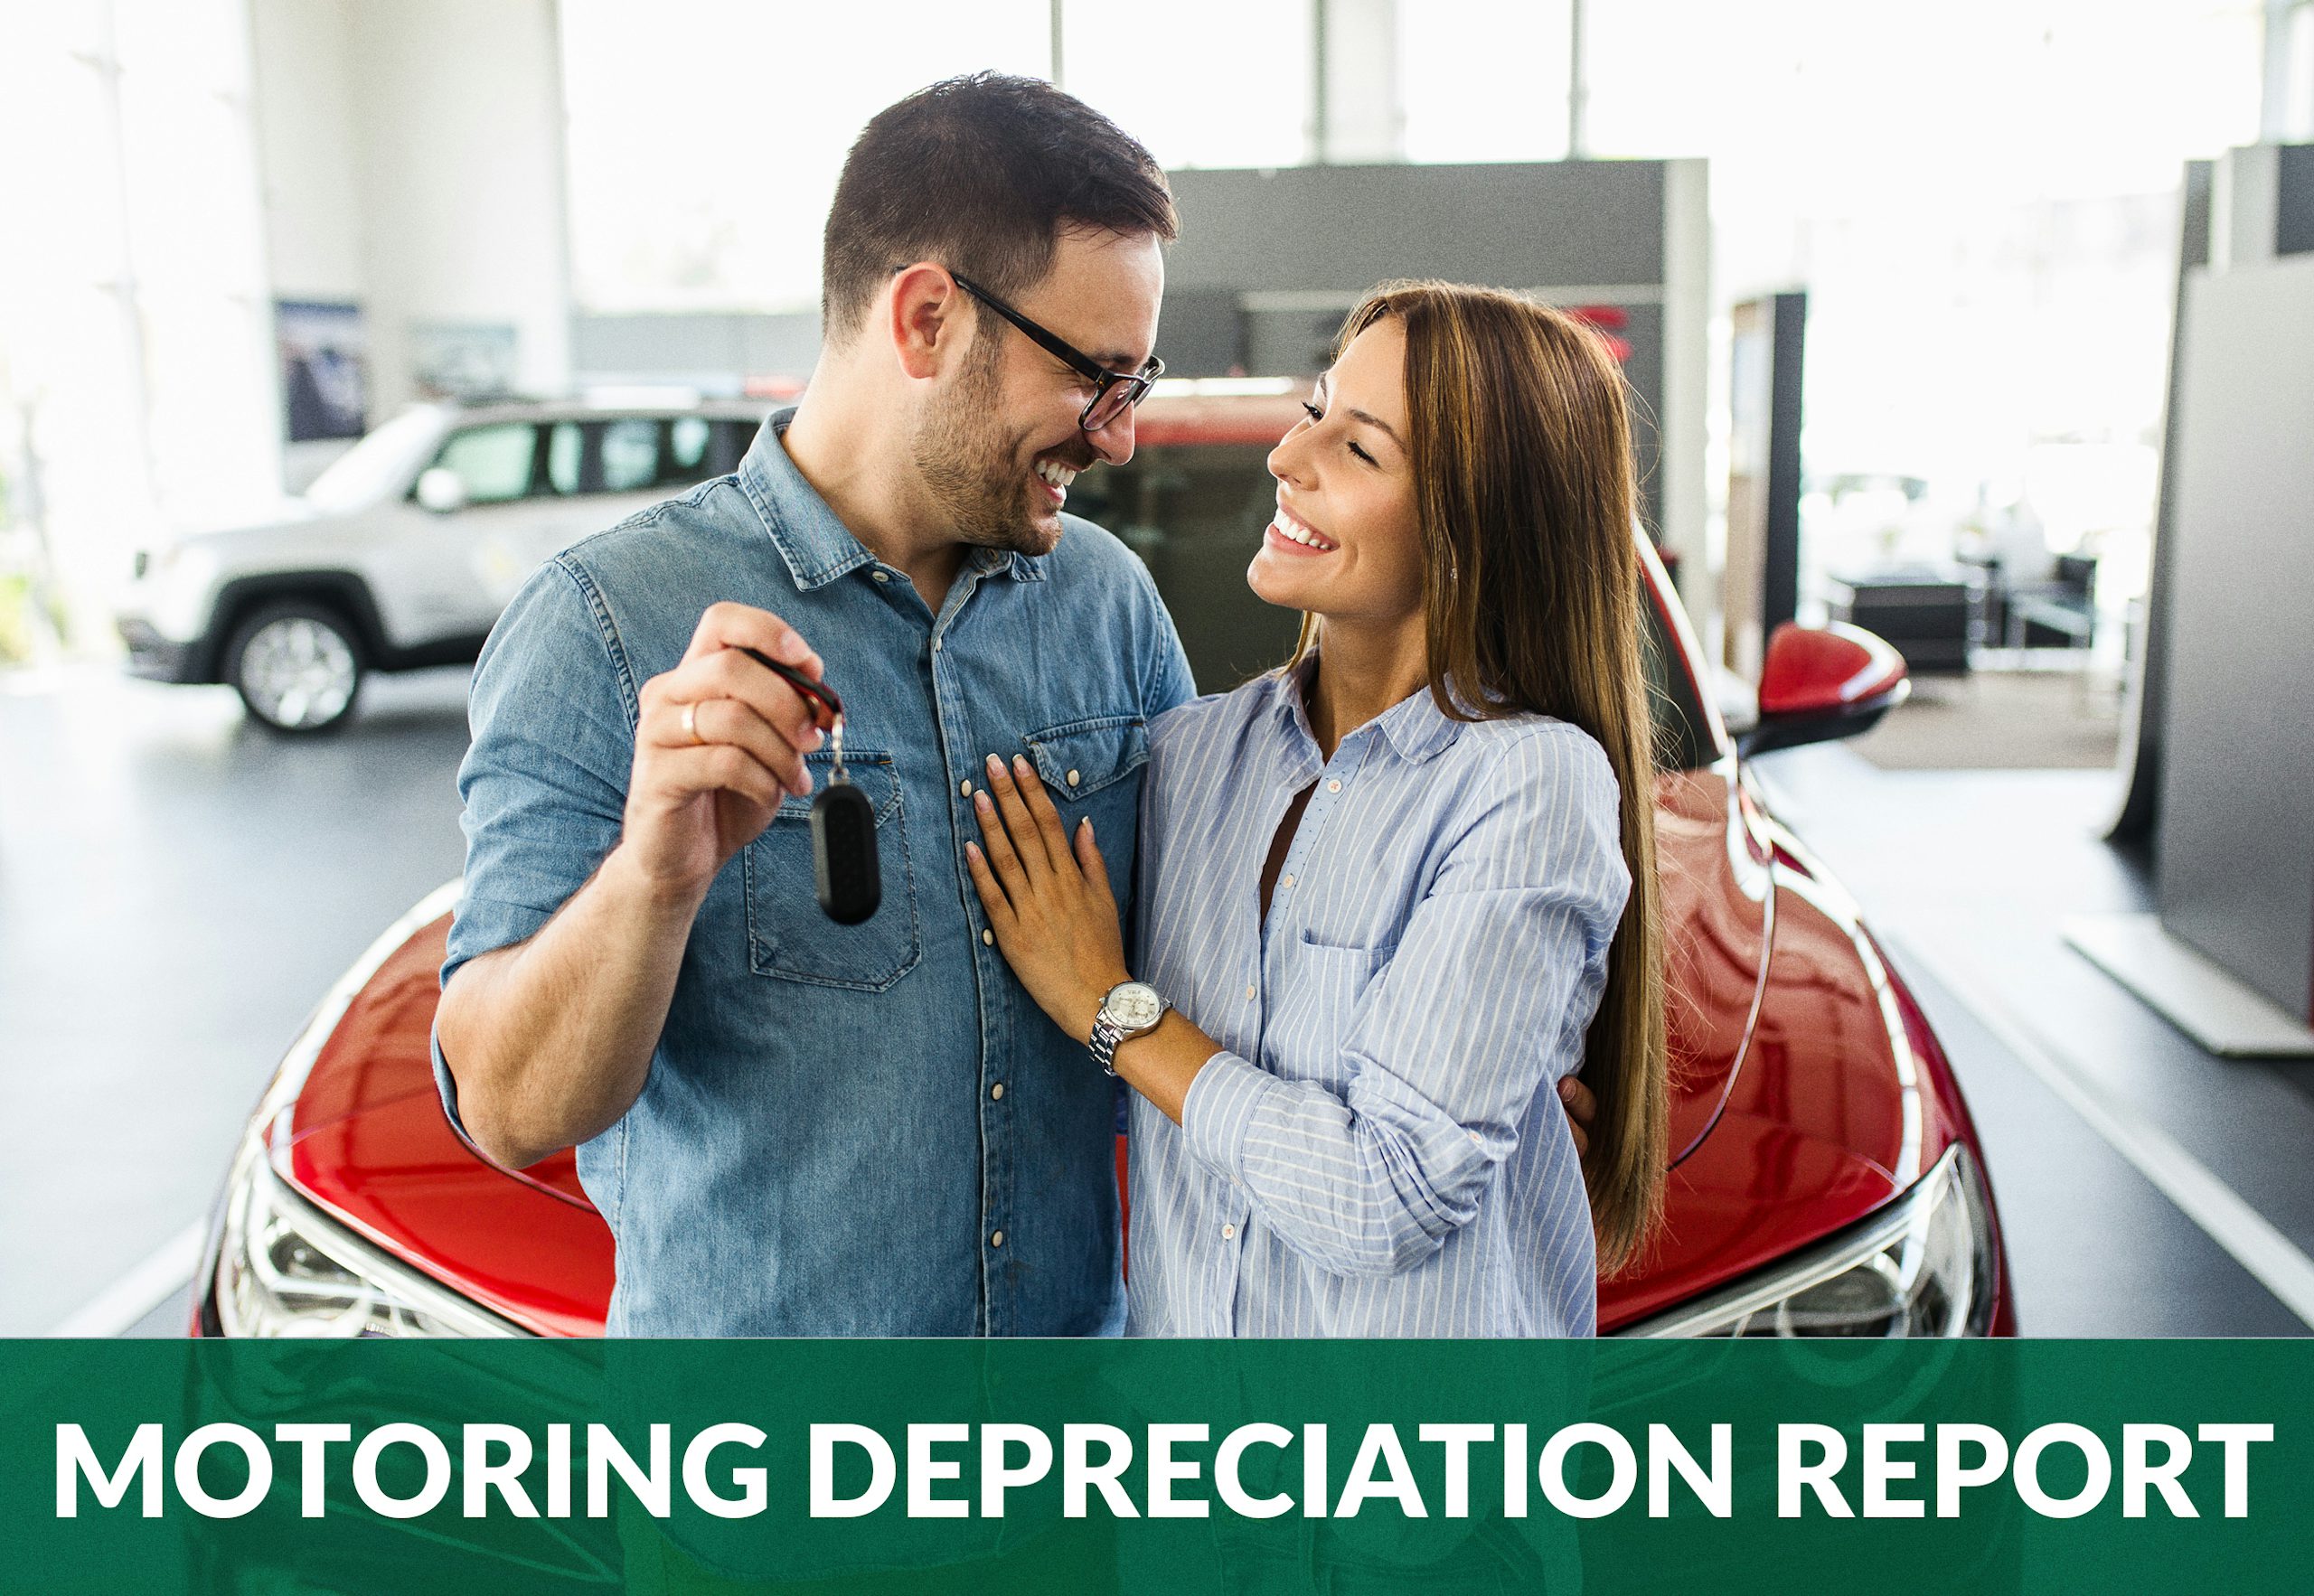 Motoring depreciation report